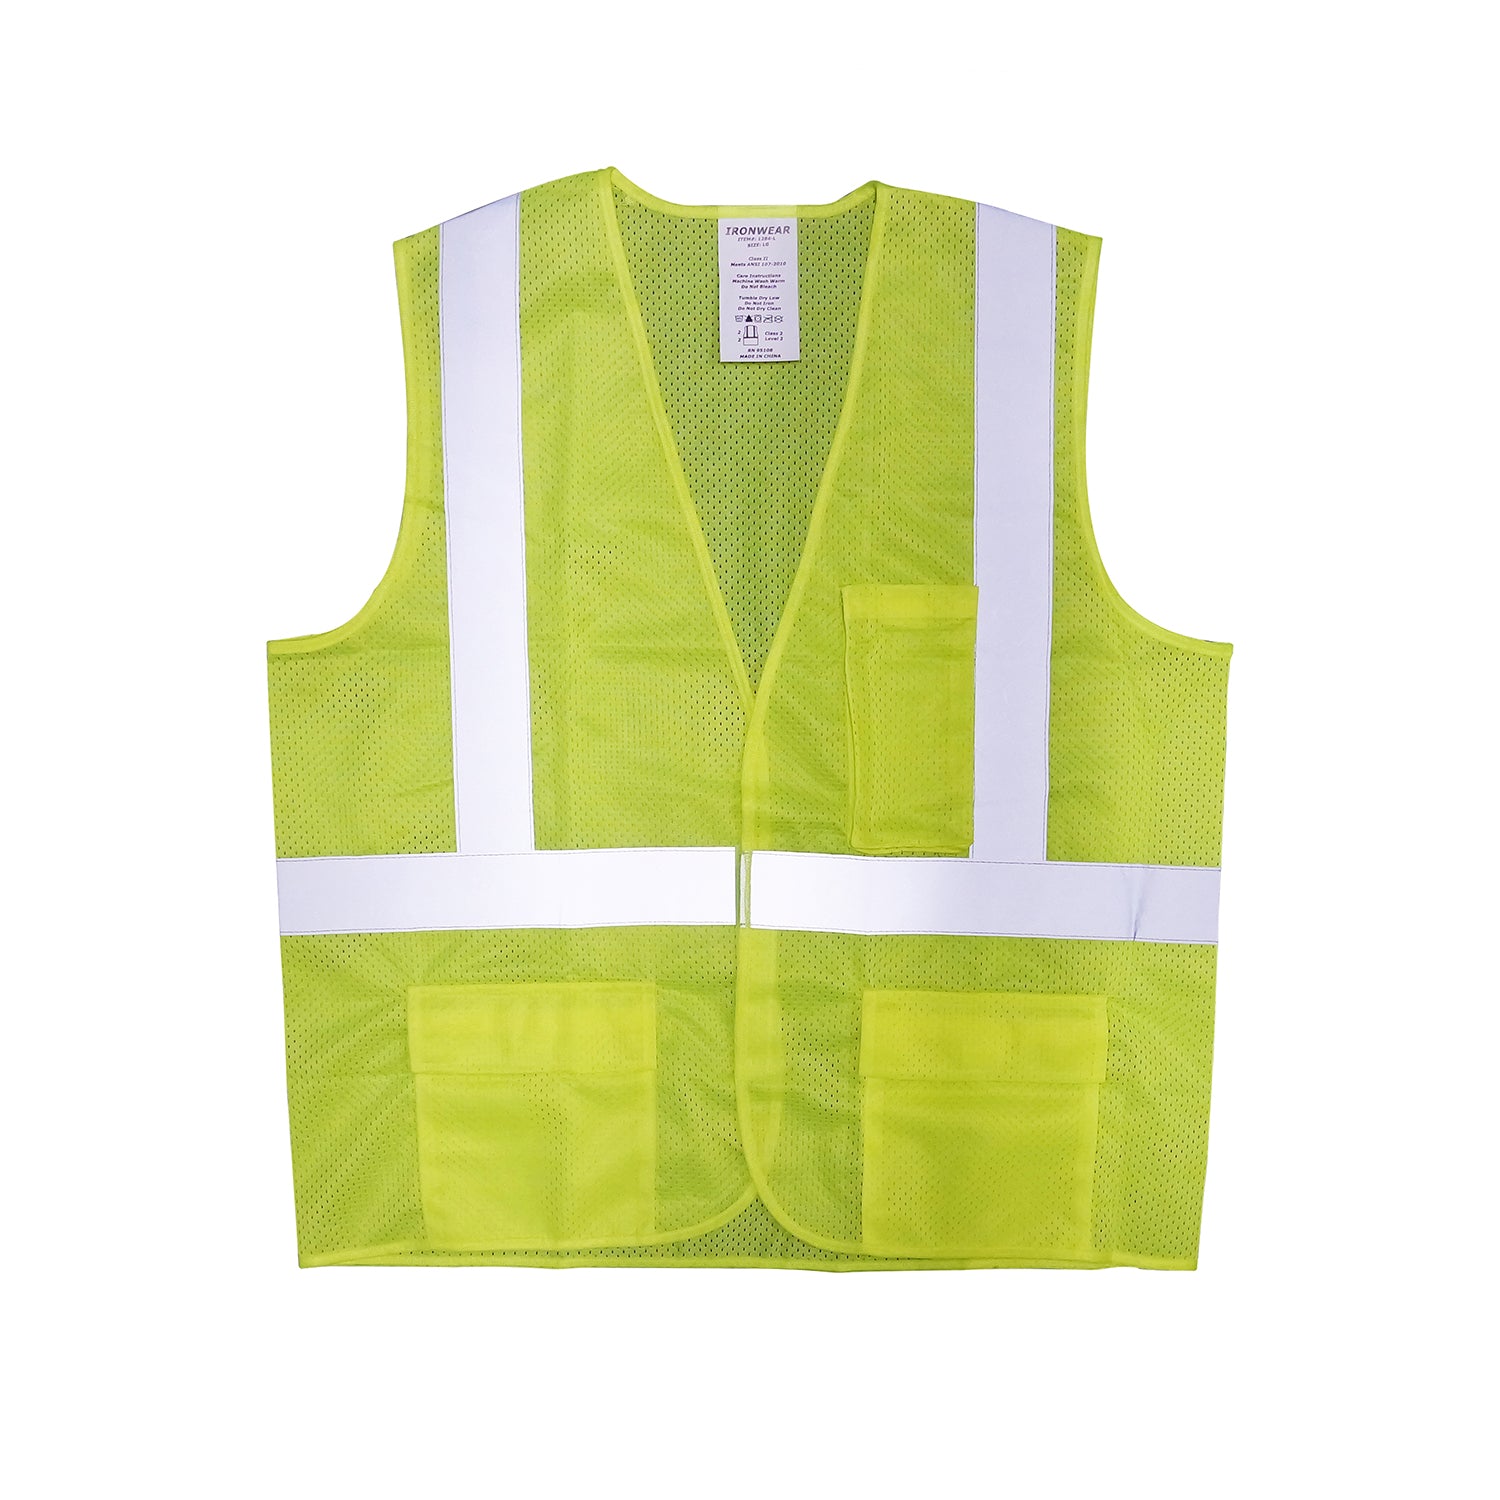 Ironwear Surveyor Safety Vest, ANSI Class 2 - Lime Mesh -Safety- eGPS Solutions Inc.